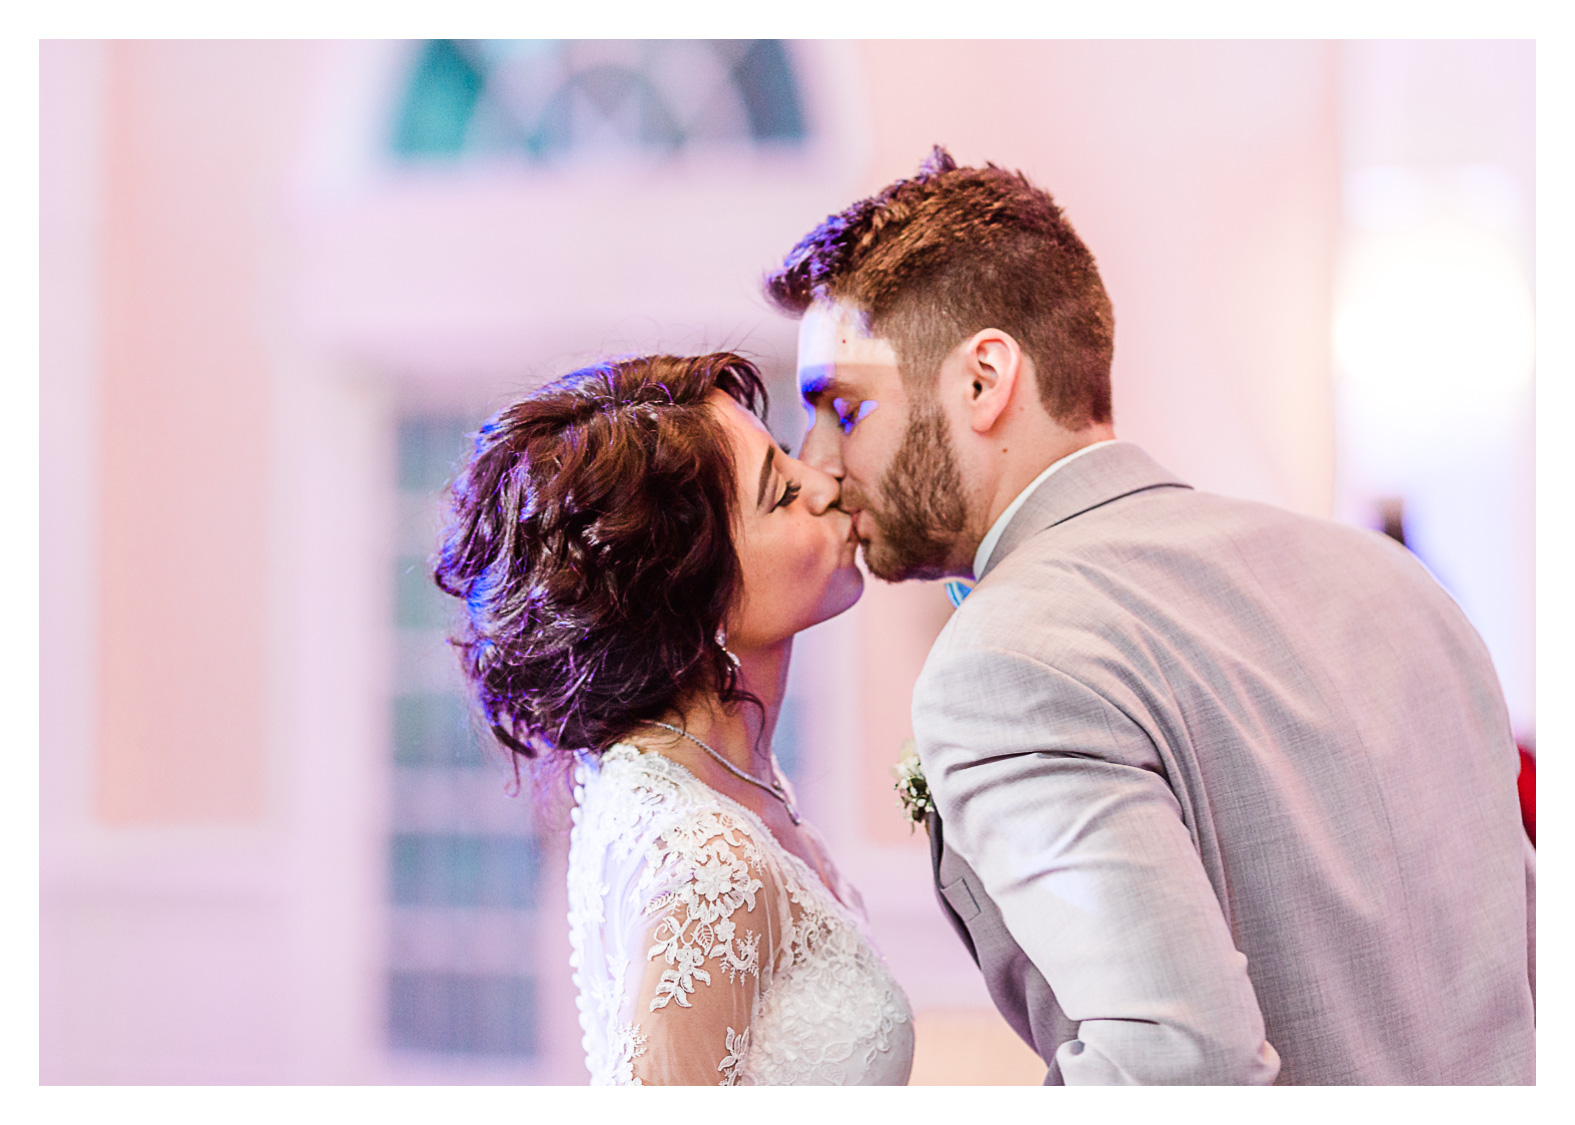 manassas-virginia-wedding-reception-foxchase-manor-bride-groom-first-dance-pink-intimate-kiss.jpg